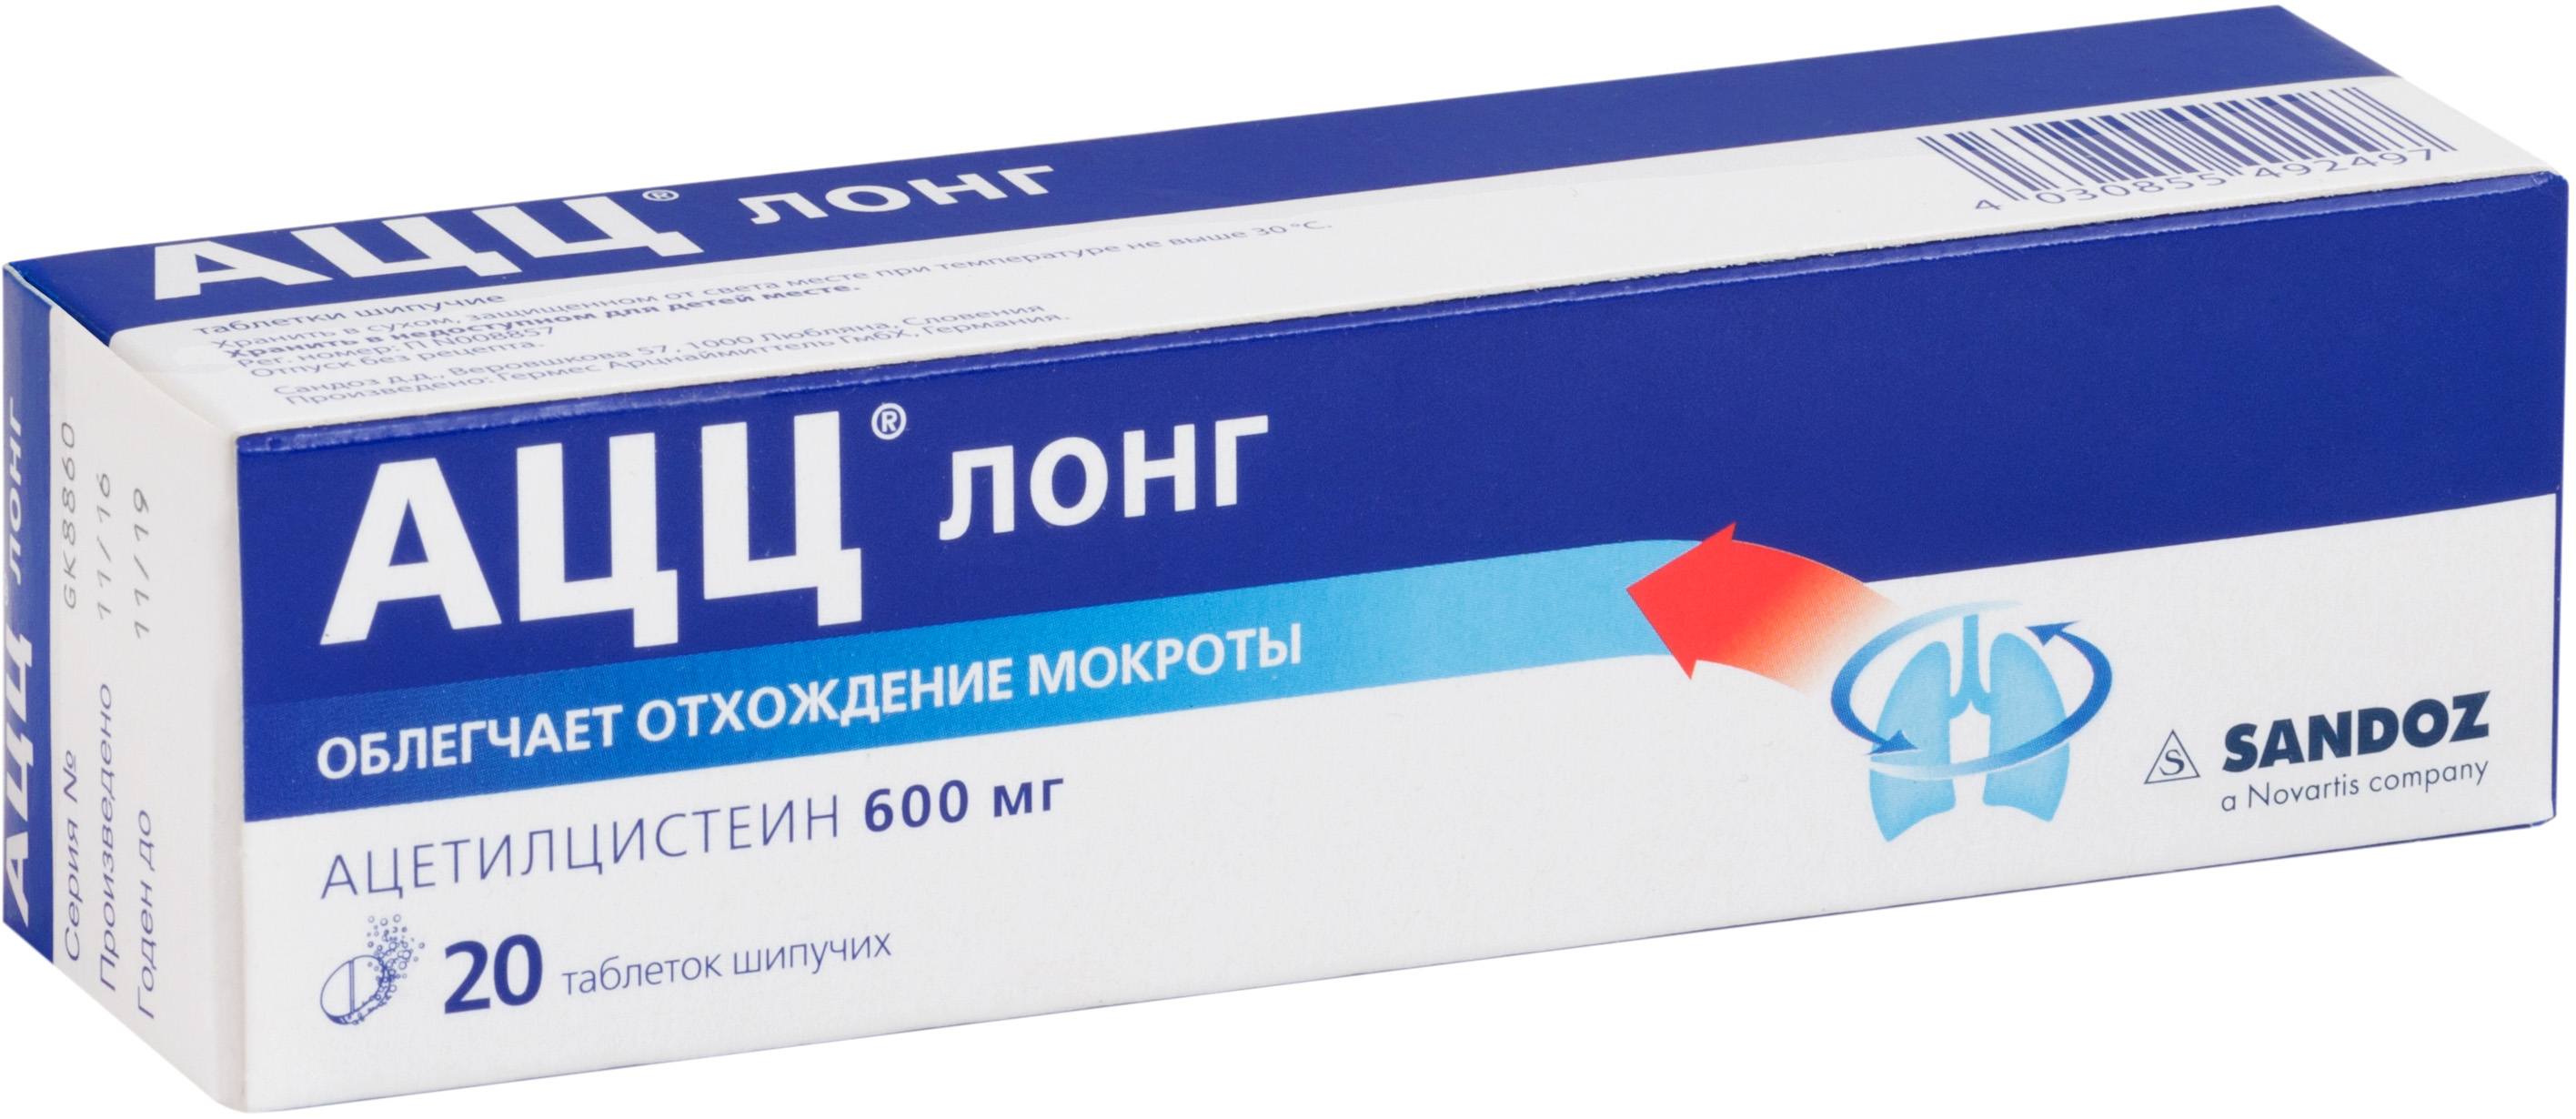 АЦЦ Лонг, таблетки шипучие 600 мг, 20 шт.